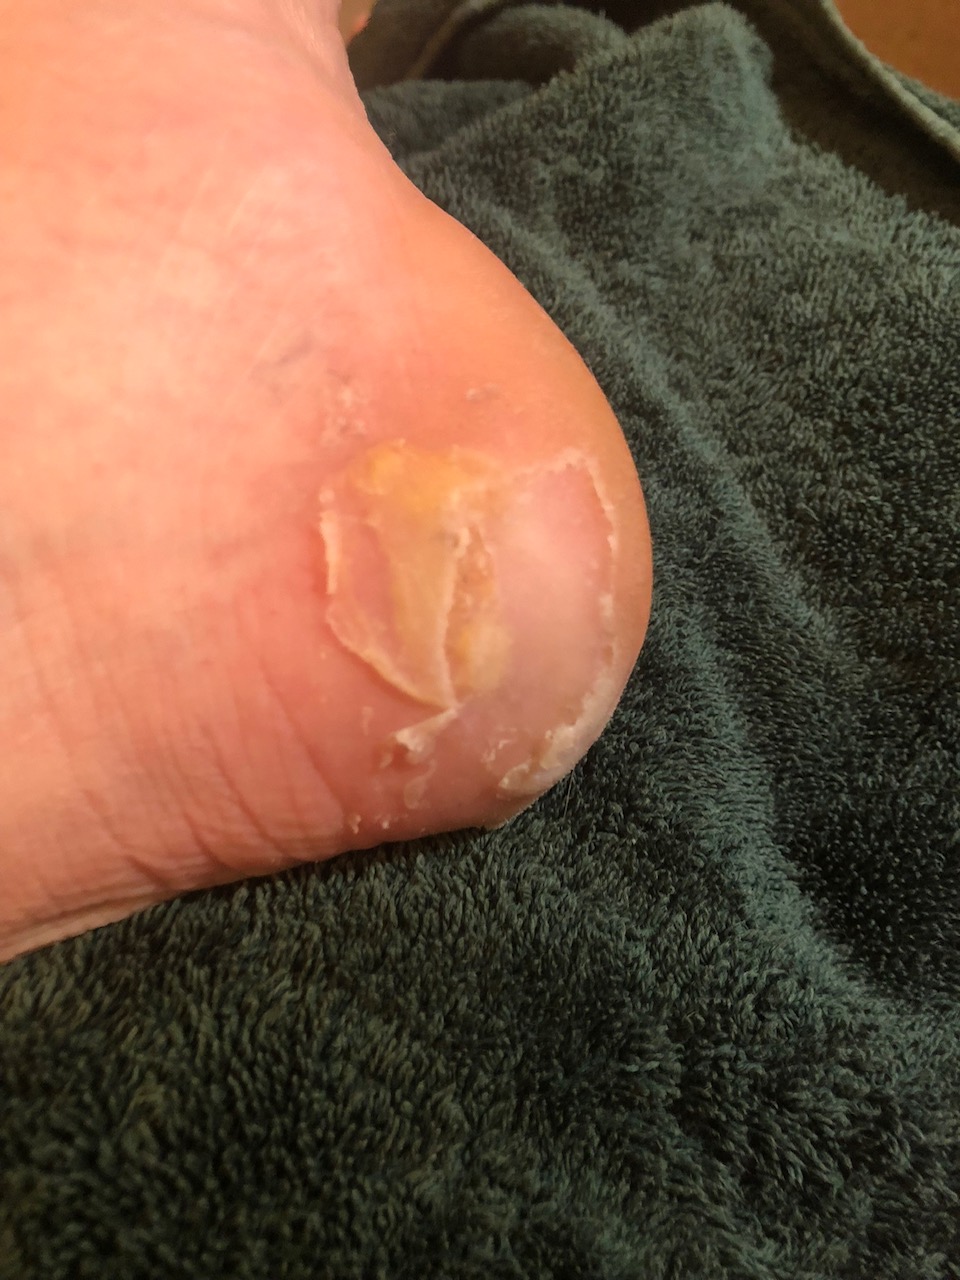 Left foot inner heel blister that goes through most of the skin